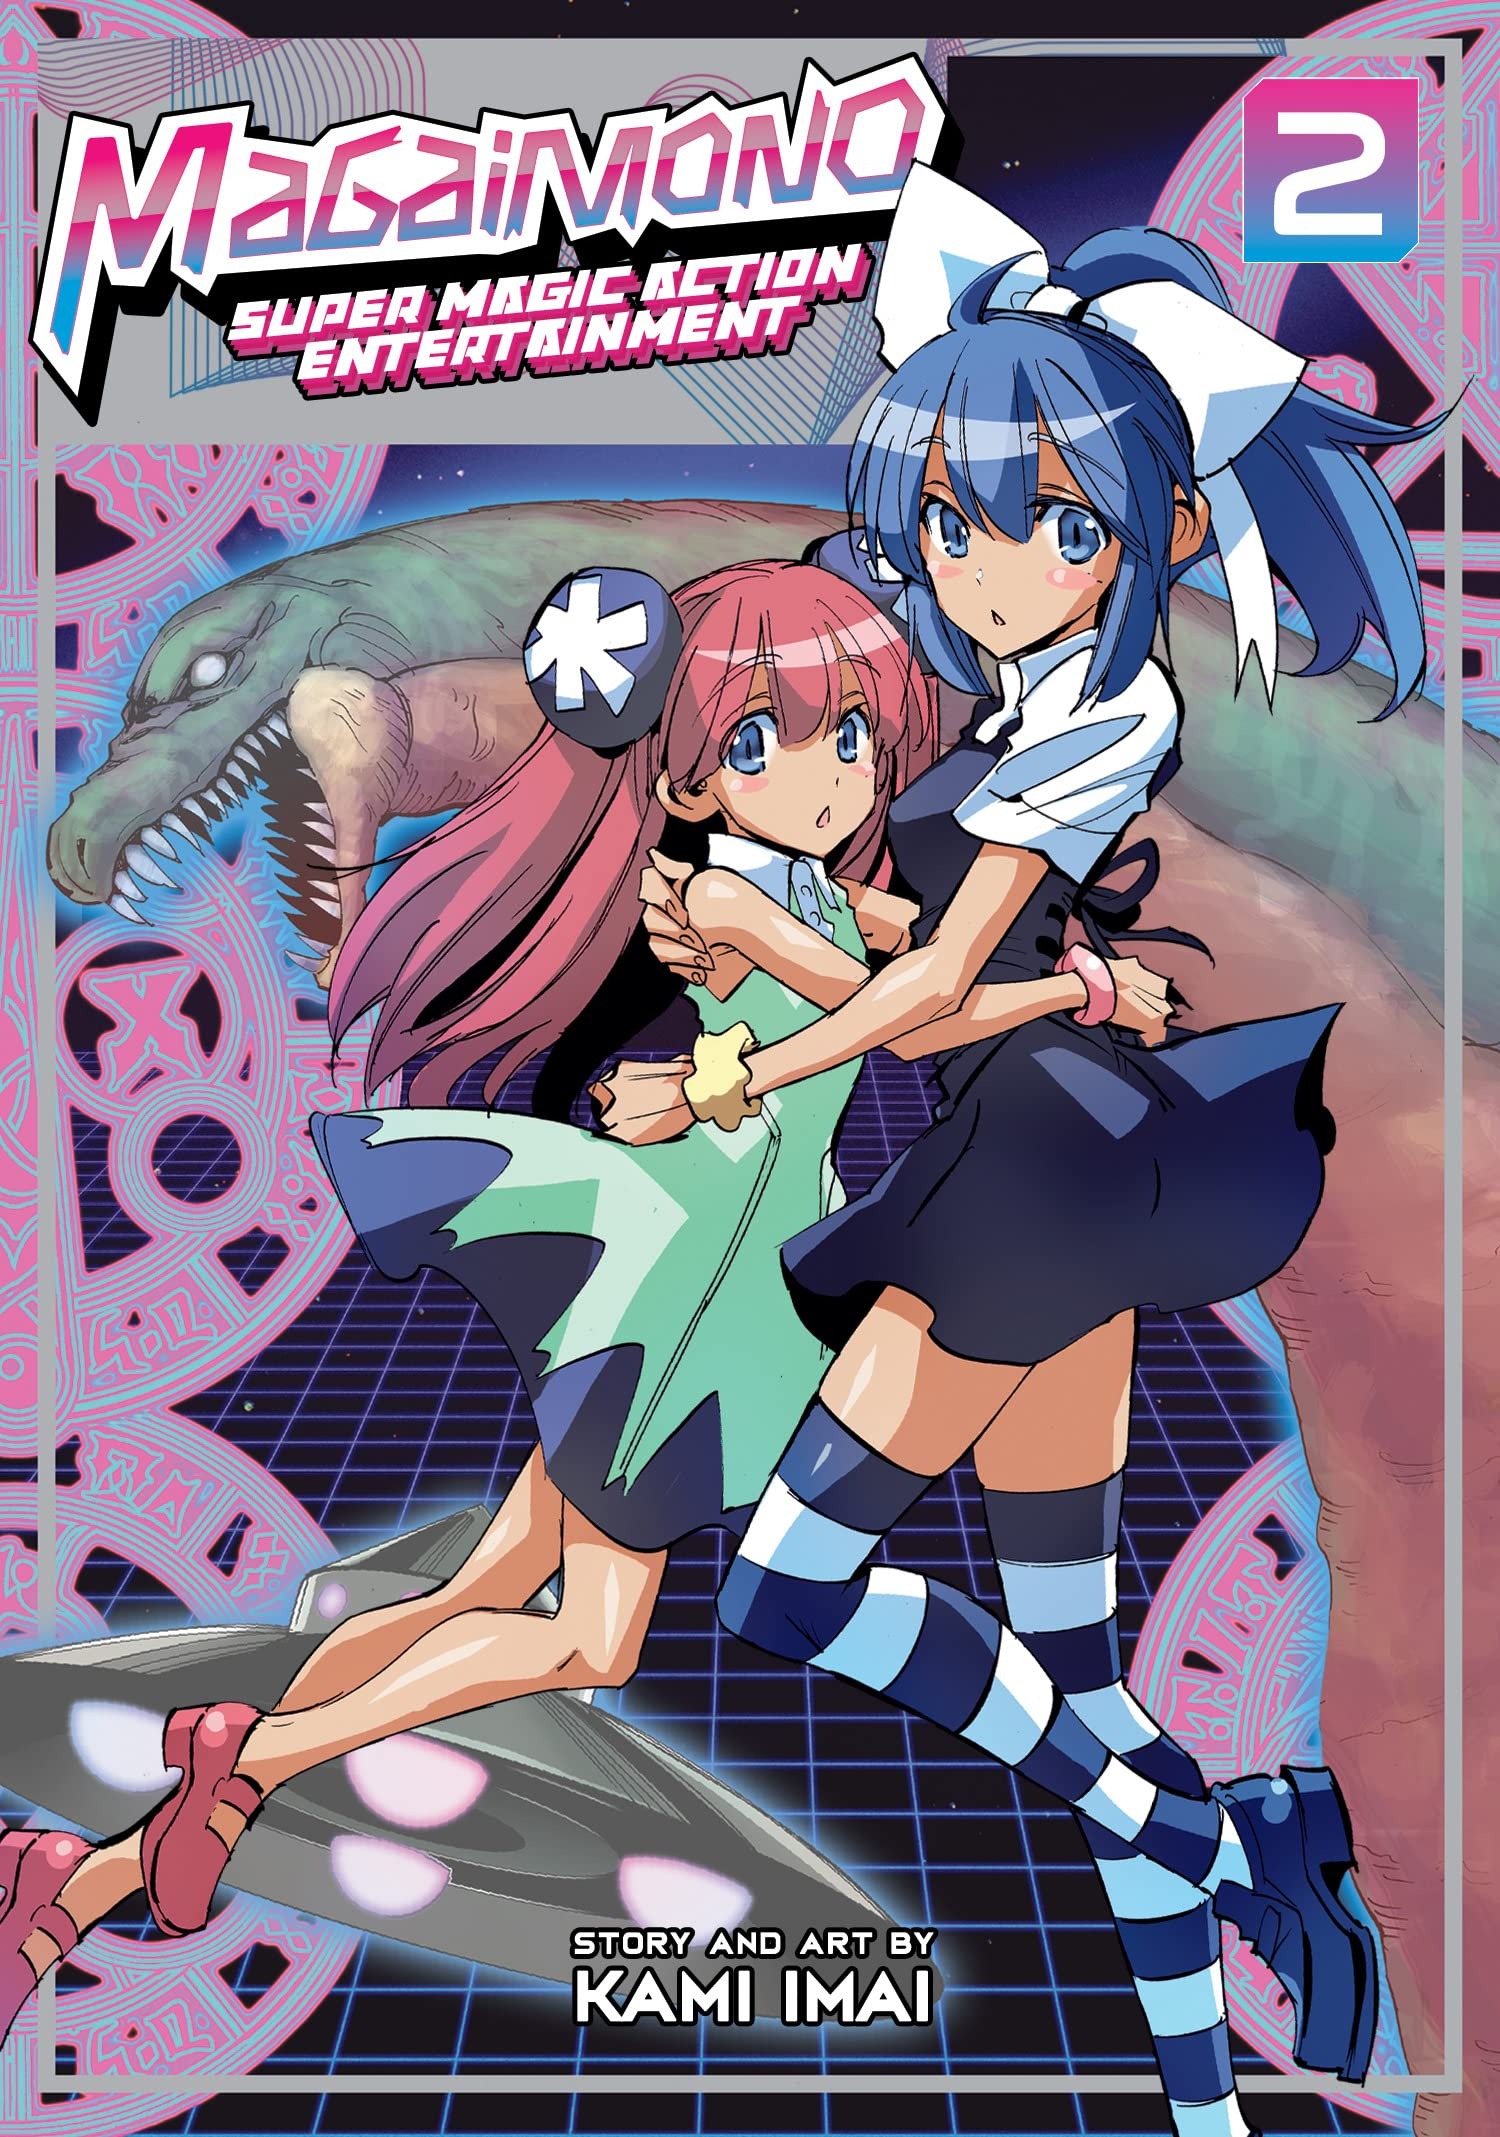 Magaimono Super Magic Action Entertainment Manga Volume 2